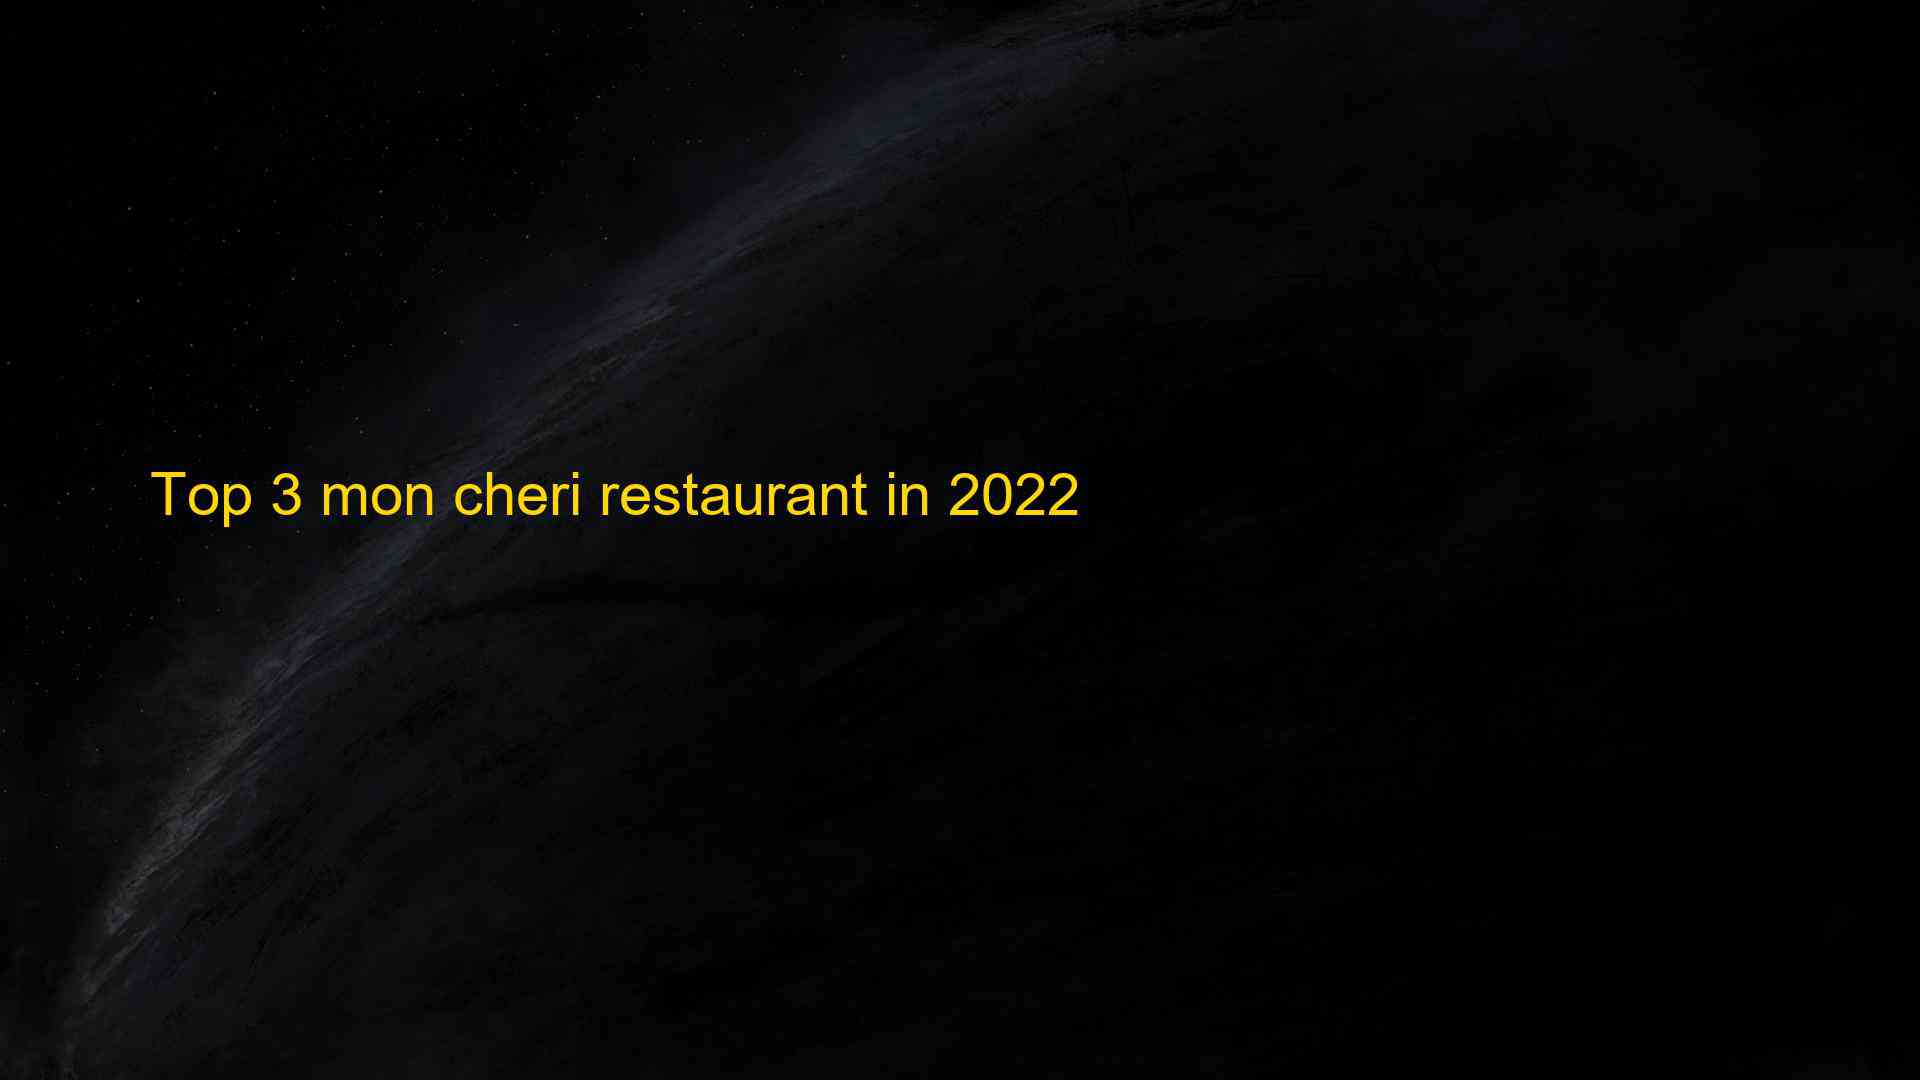 Top 3 mon cheri restaurant in 2022 1663505627